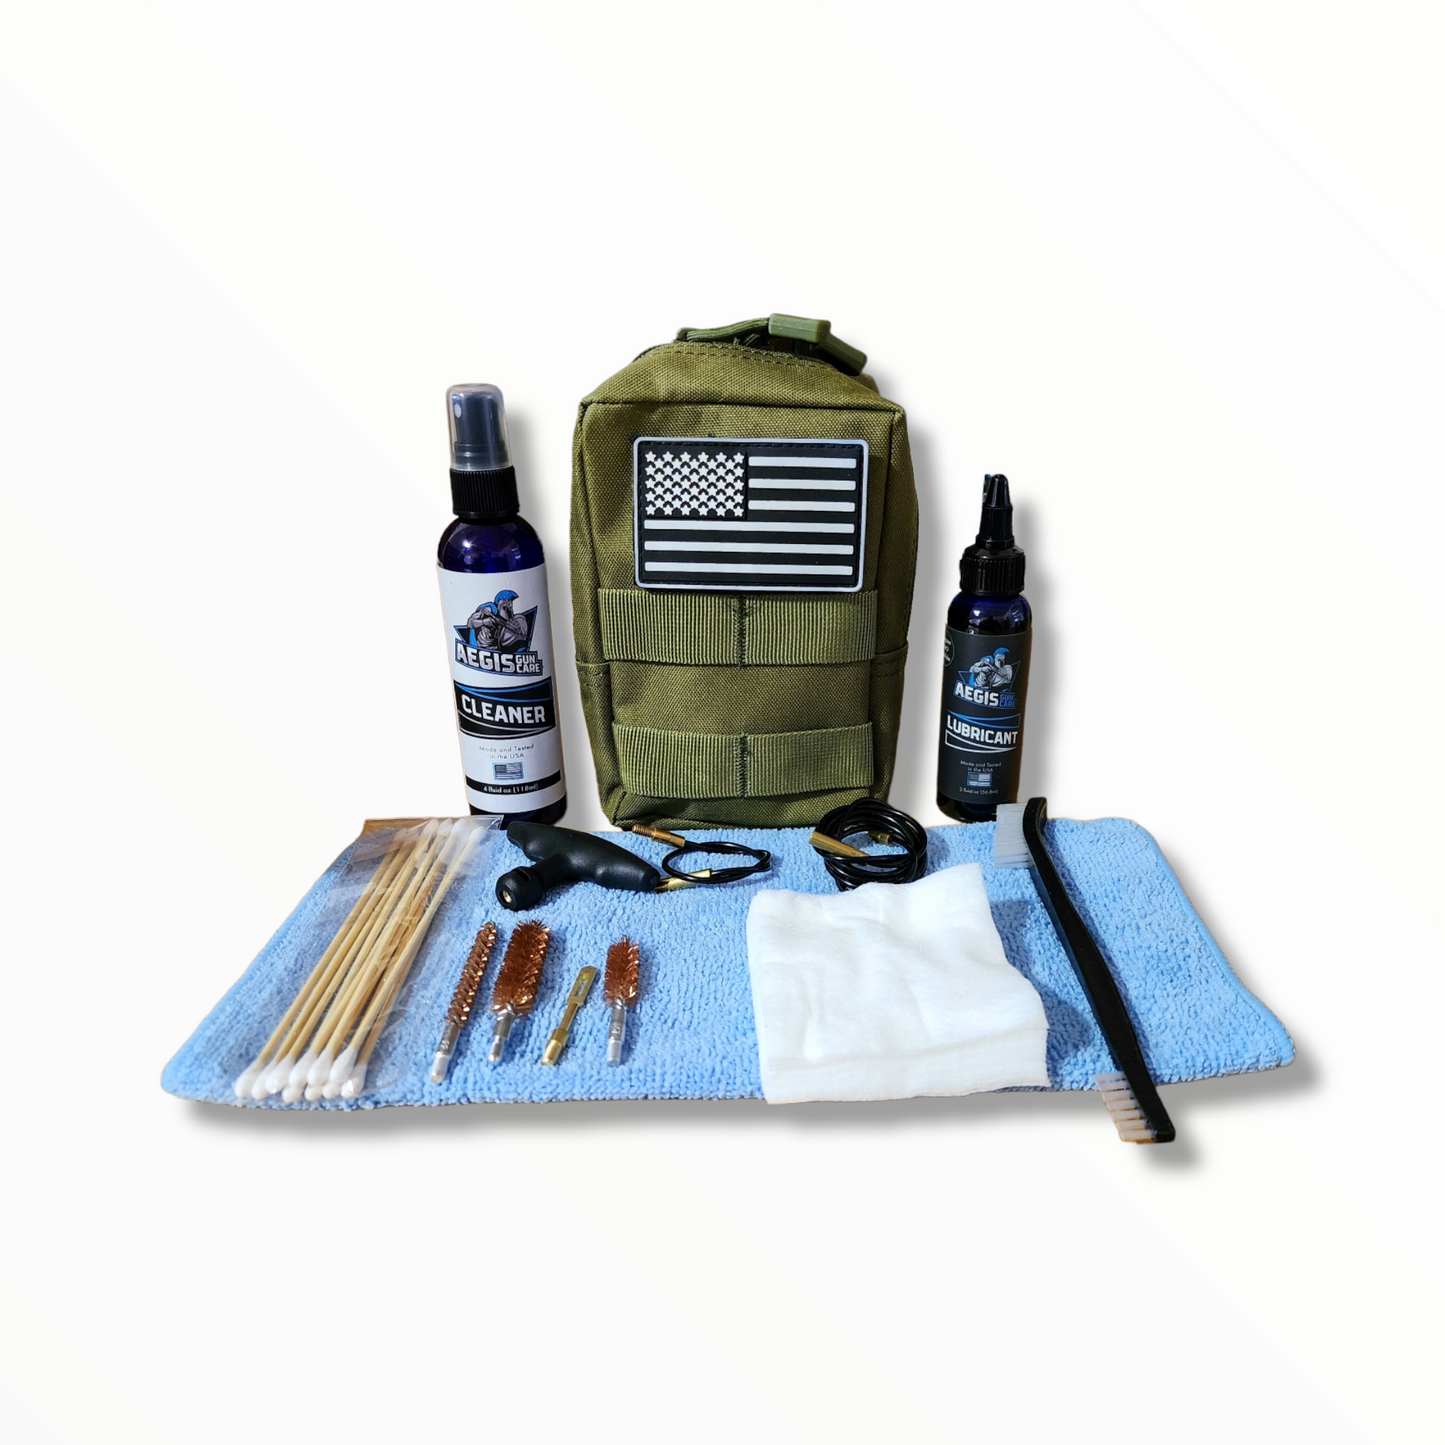 Field cleaning kit (OD Green)